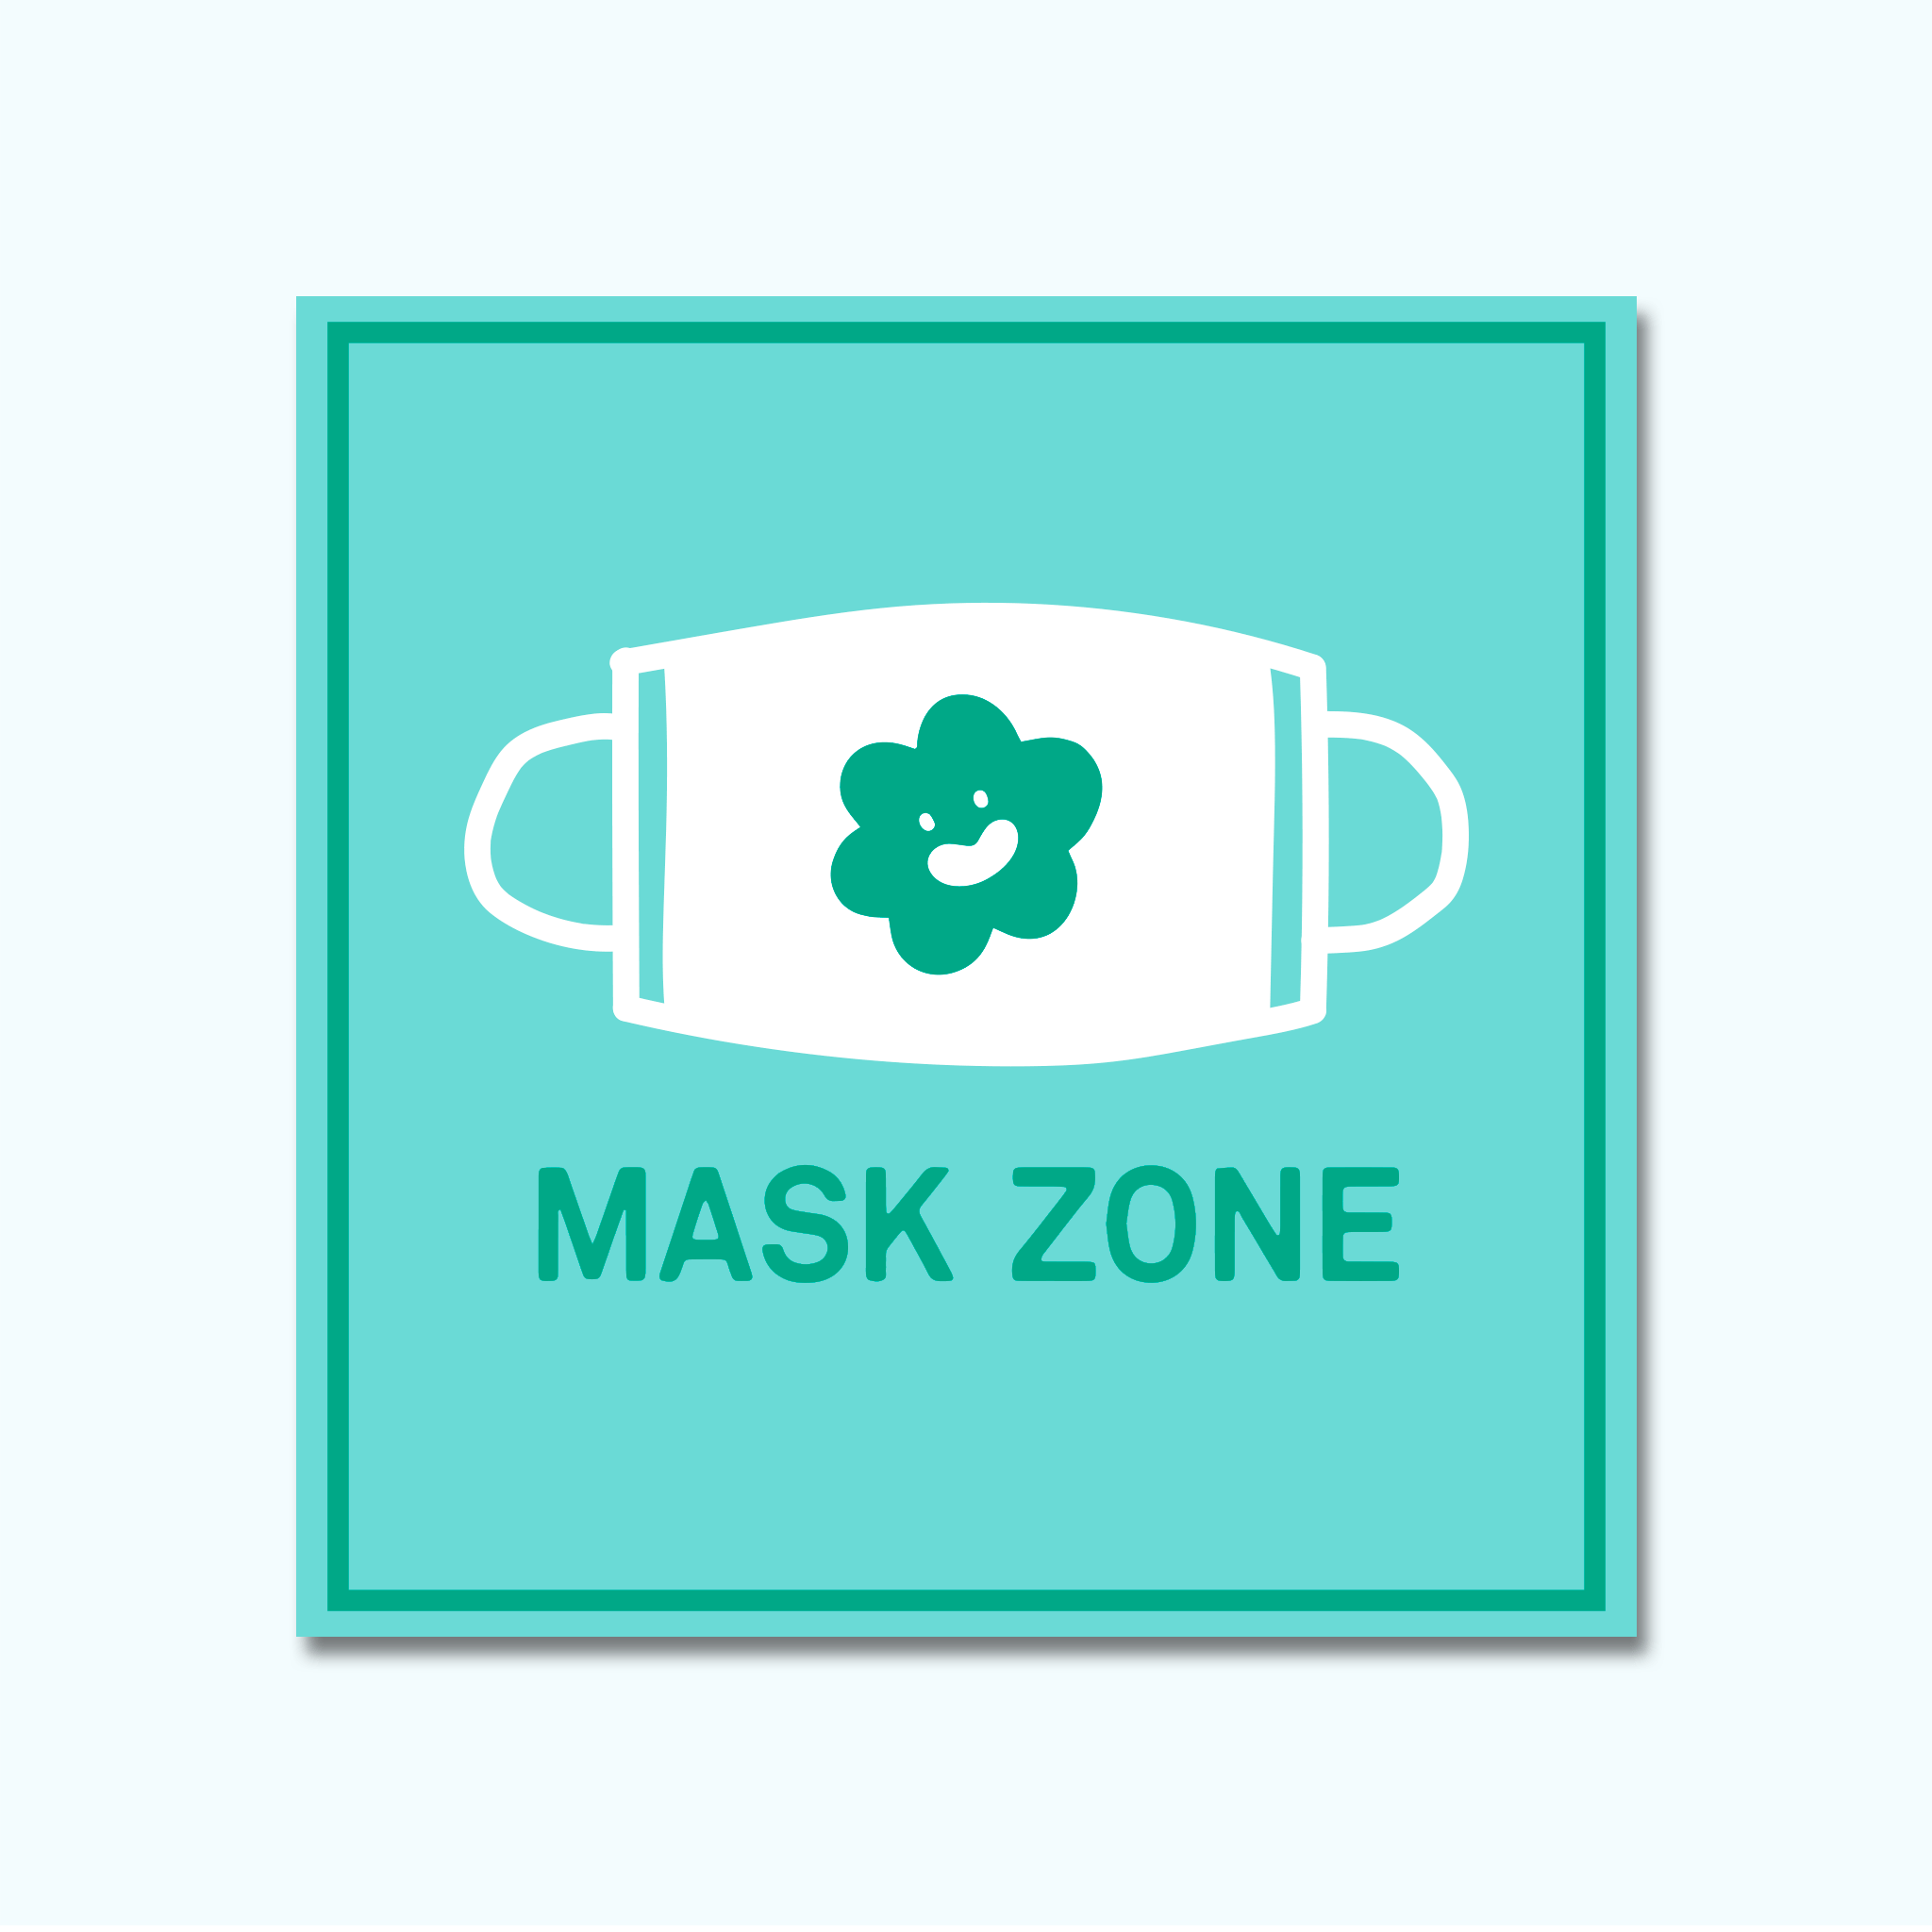 School Mask Zone